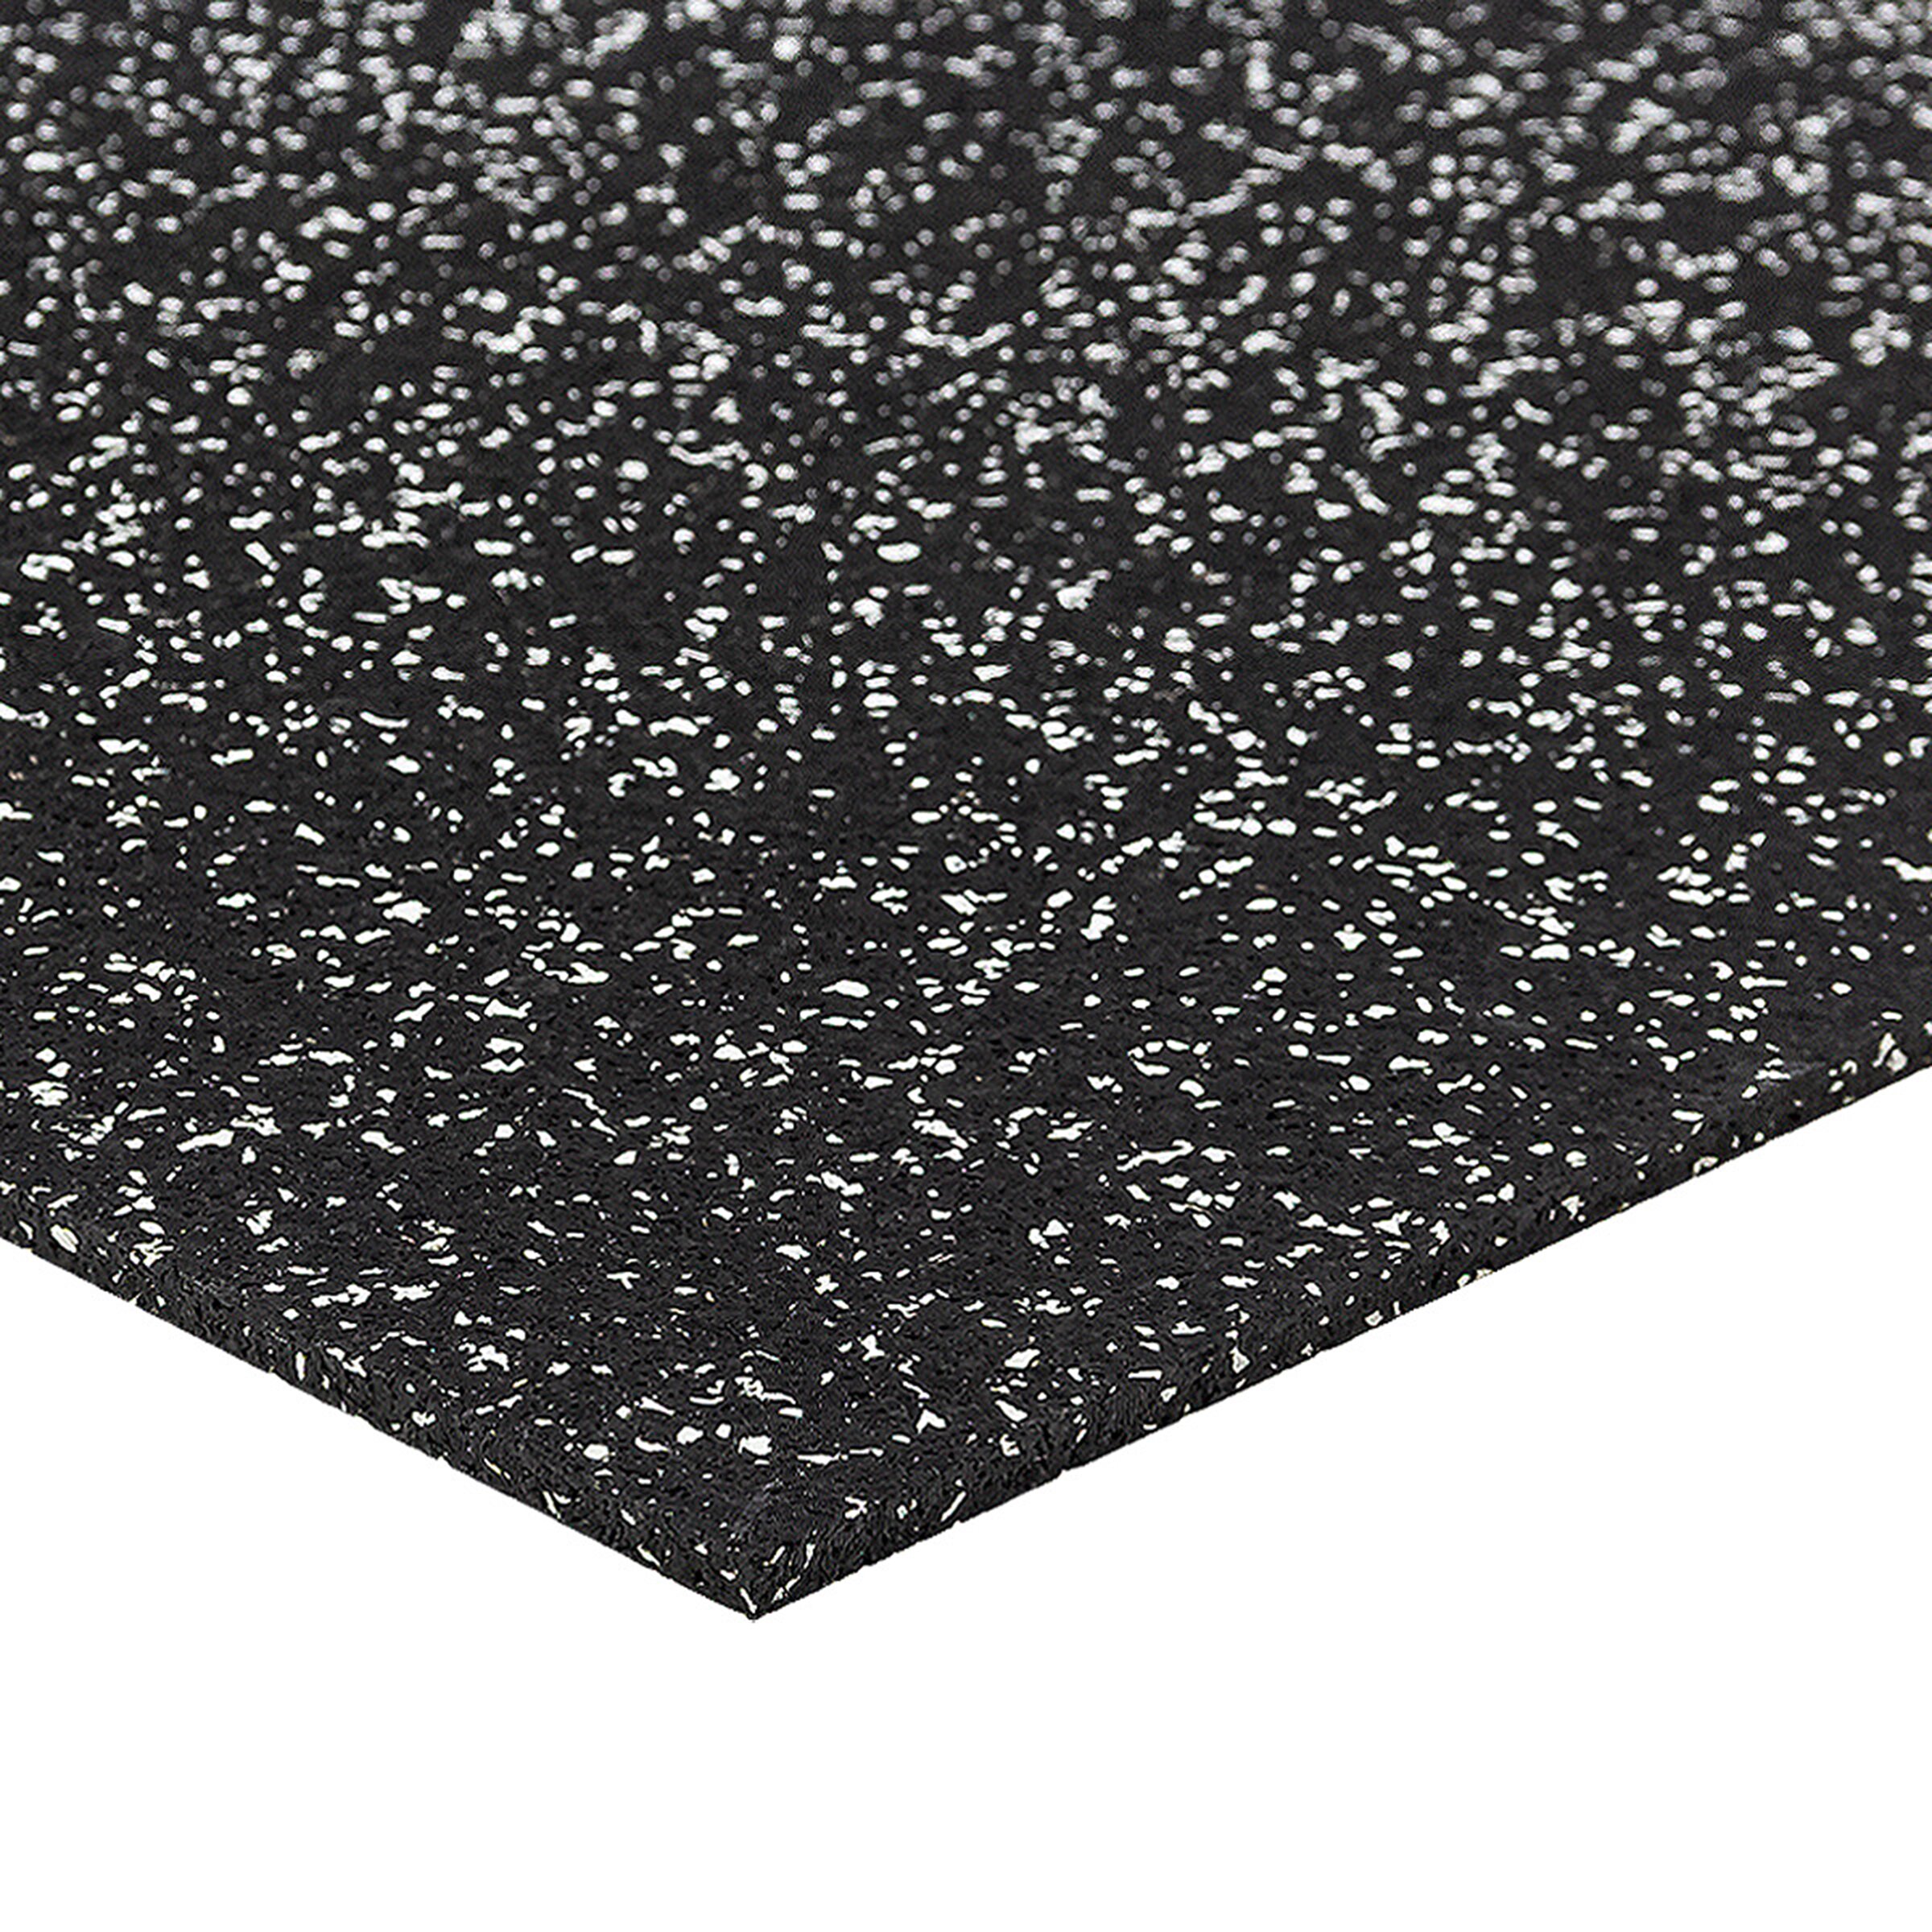 Černo-bílá podlahová guma (puzzle - střed) FLOMA FitFlo SF1050 - délka 50 cm, šířka 50 cm, výška 0,8 cm